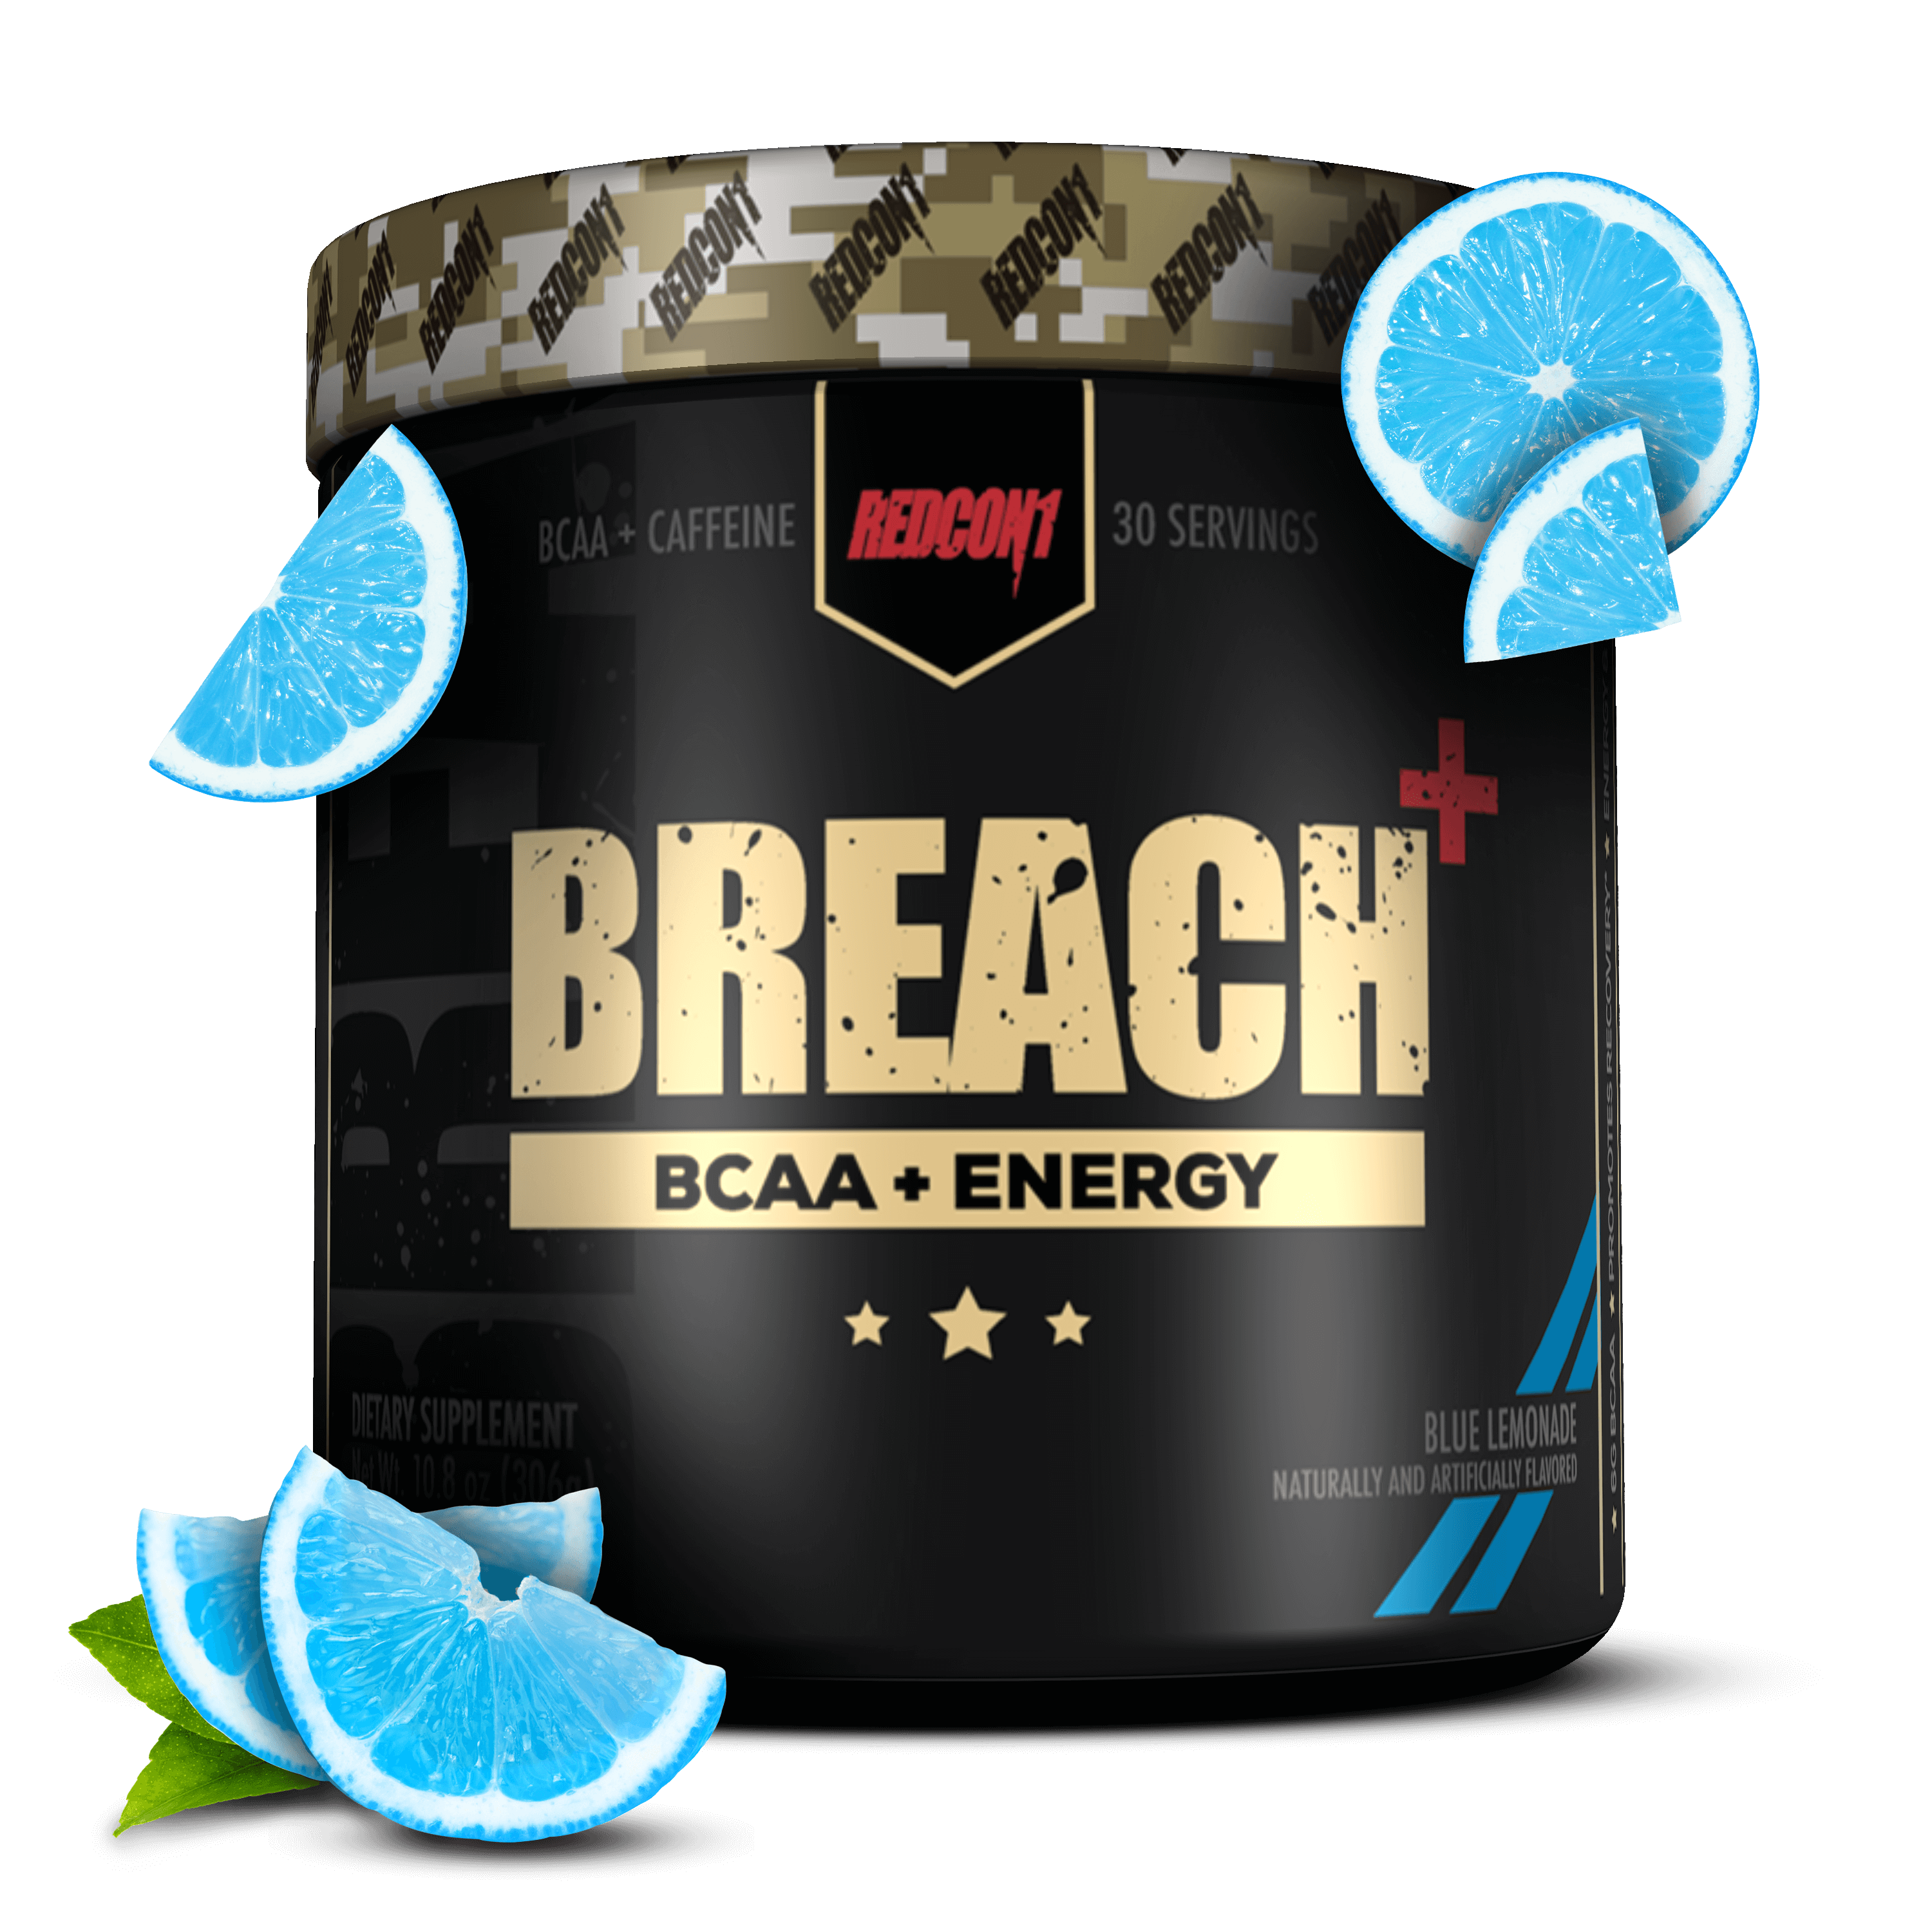 Breach and Energy Blue Lemonade